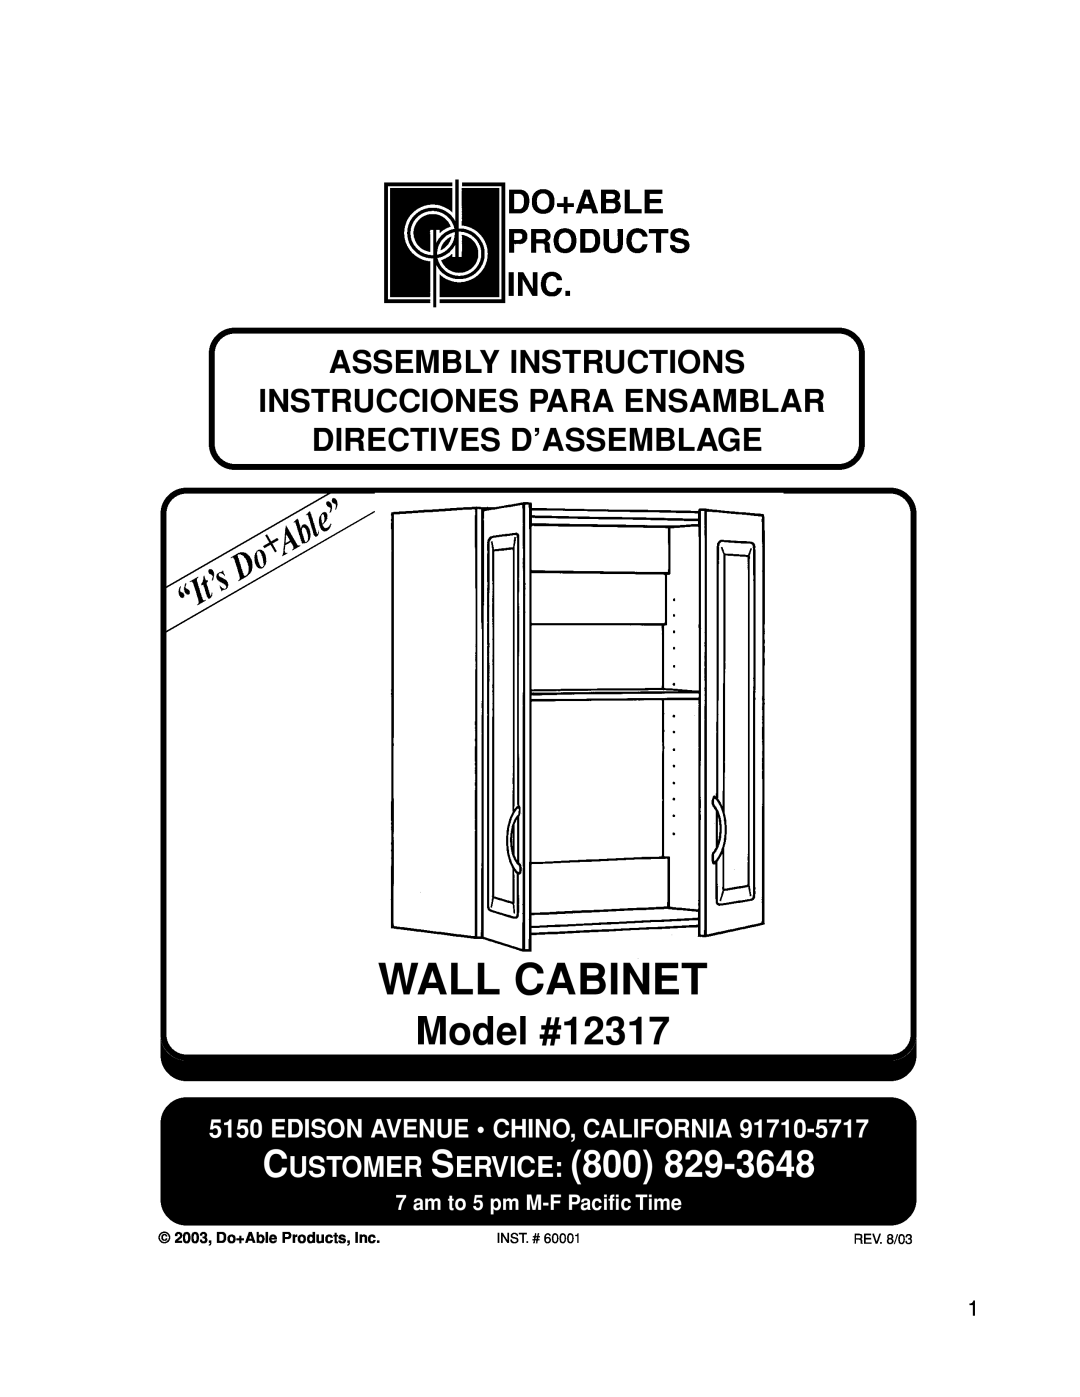 Closet Maid manual Wall Cabinet, Model #12317, Customer Service, Assembly Instructions, Edison Avenue Chino, California 